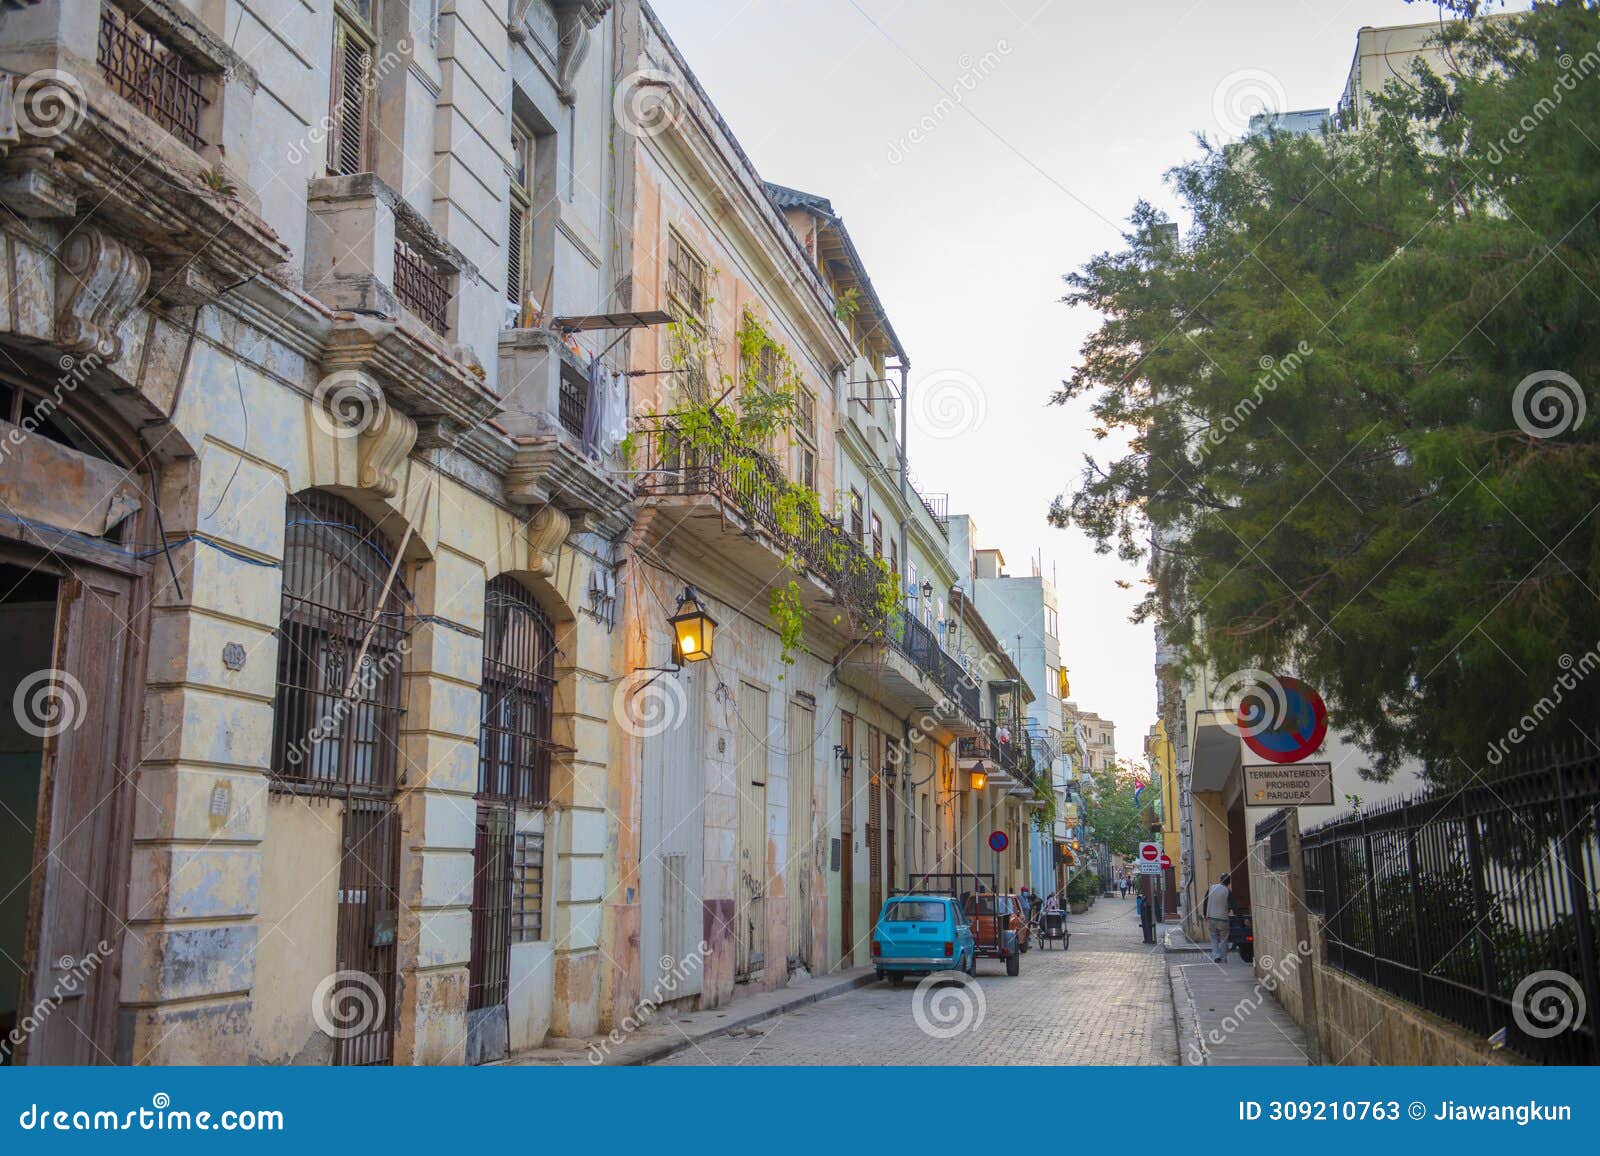 calle amargura street, old havana, havana, cuba